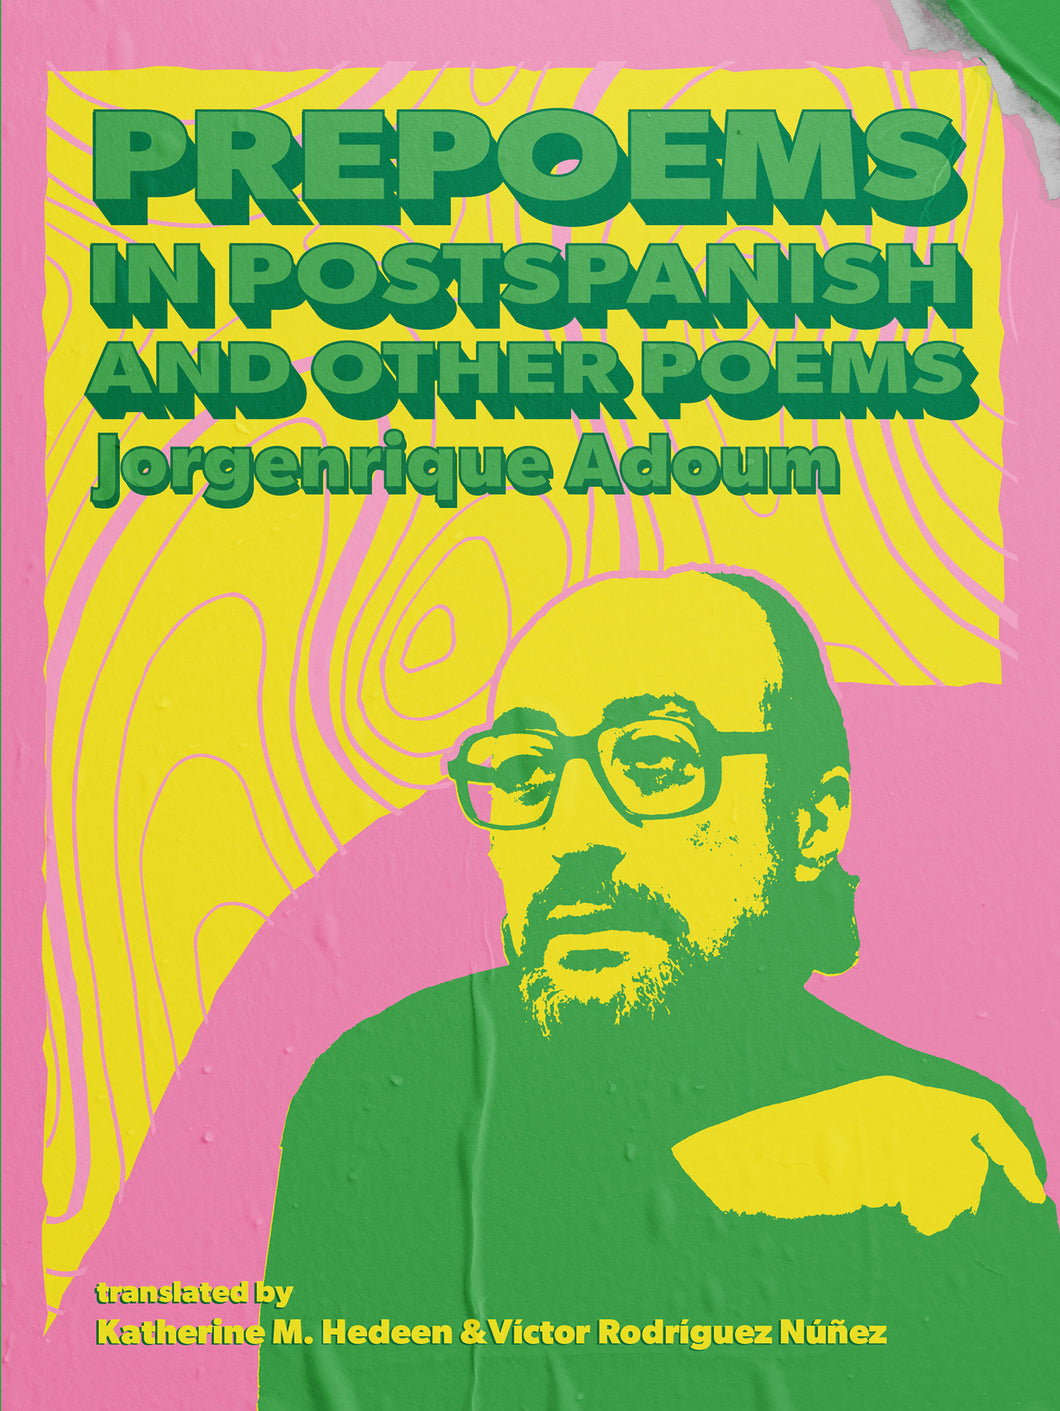 Adoum, Jorgenrique: prepoems in postspanish and other poems